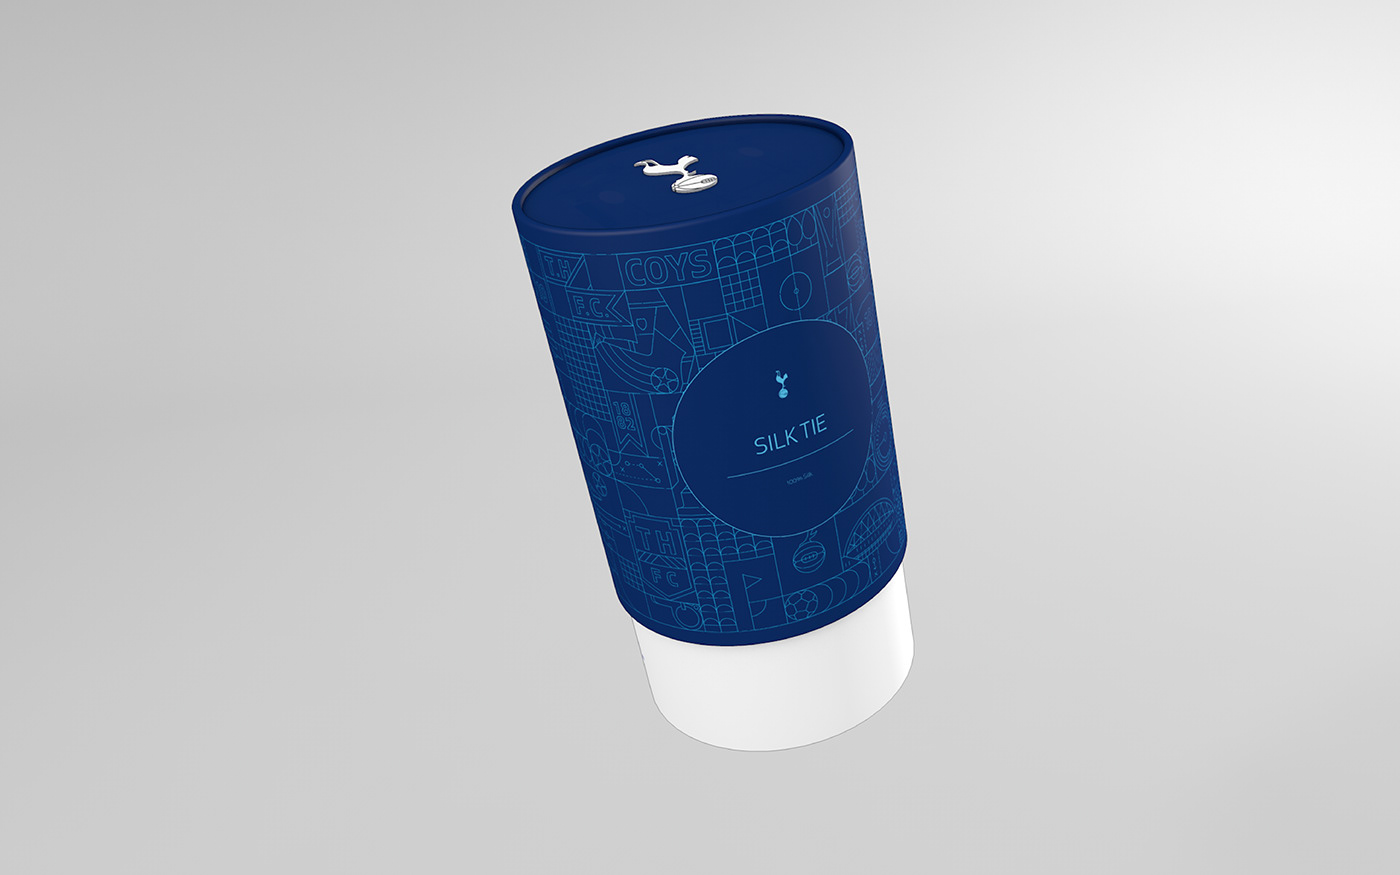 ILLUSTRATION  Packaging modular flexible football Tottenham Hotspur Spurs branding  Retail